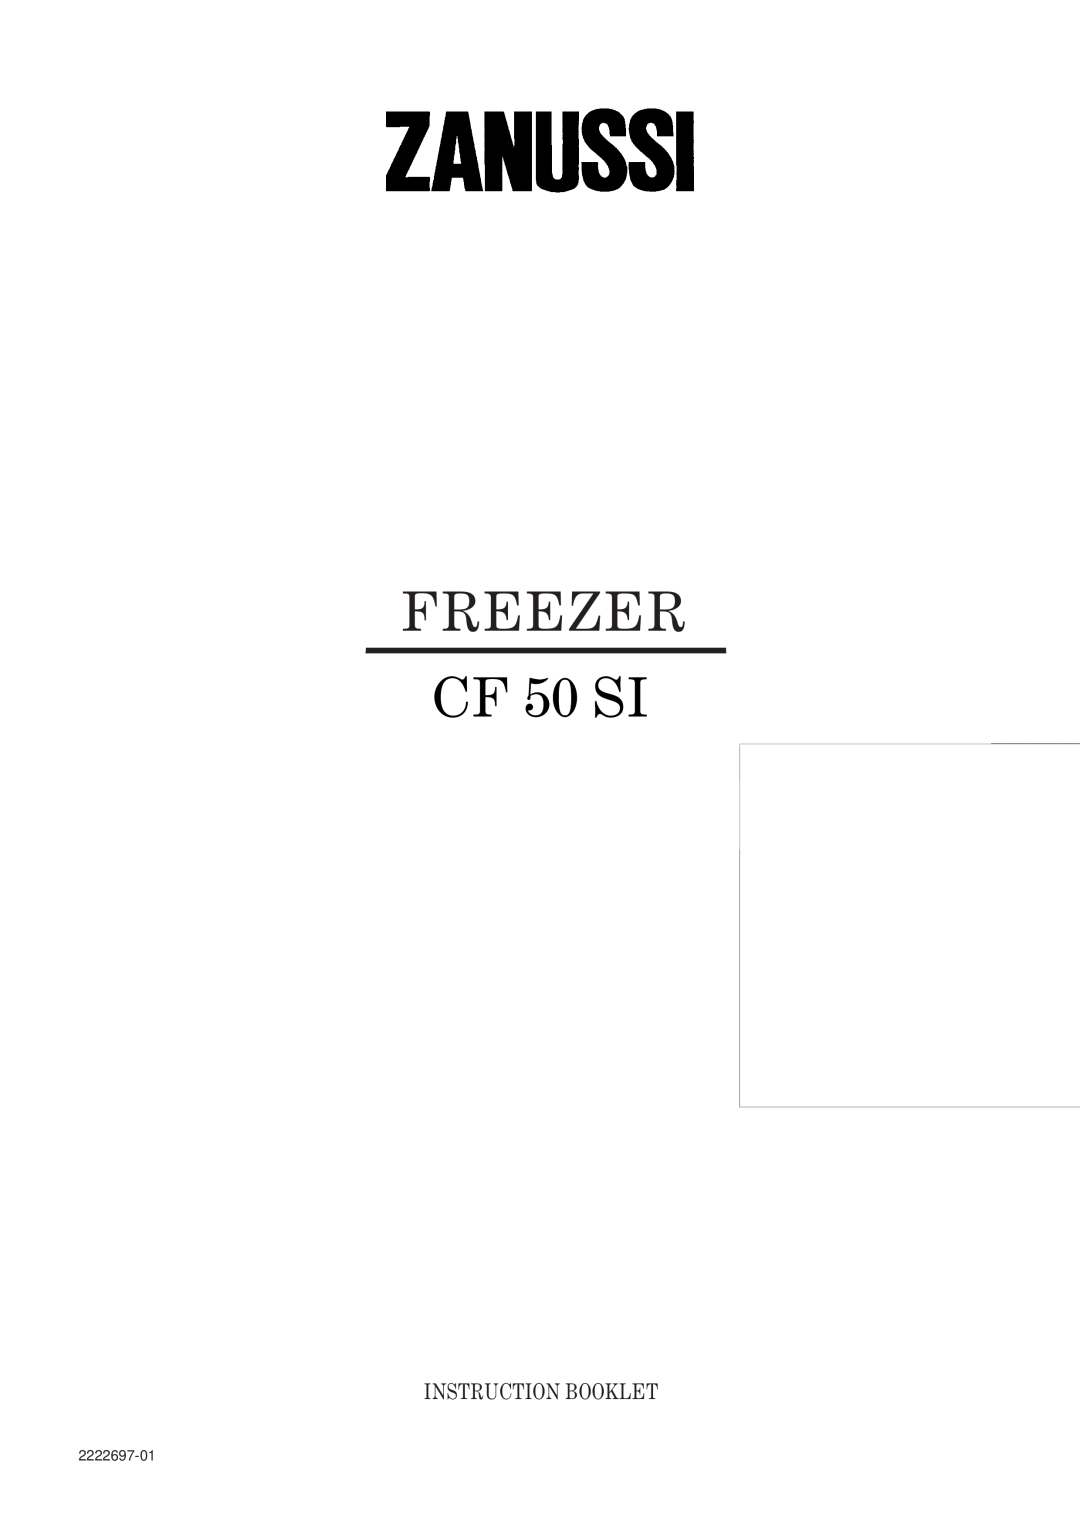 Zanussi manual FREEZER CF 50 SI, Instruction Booklet, 2222697-01 